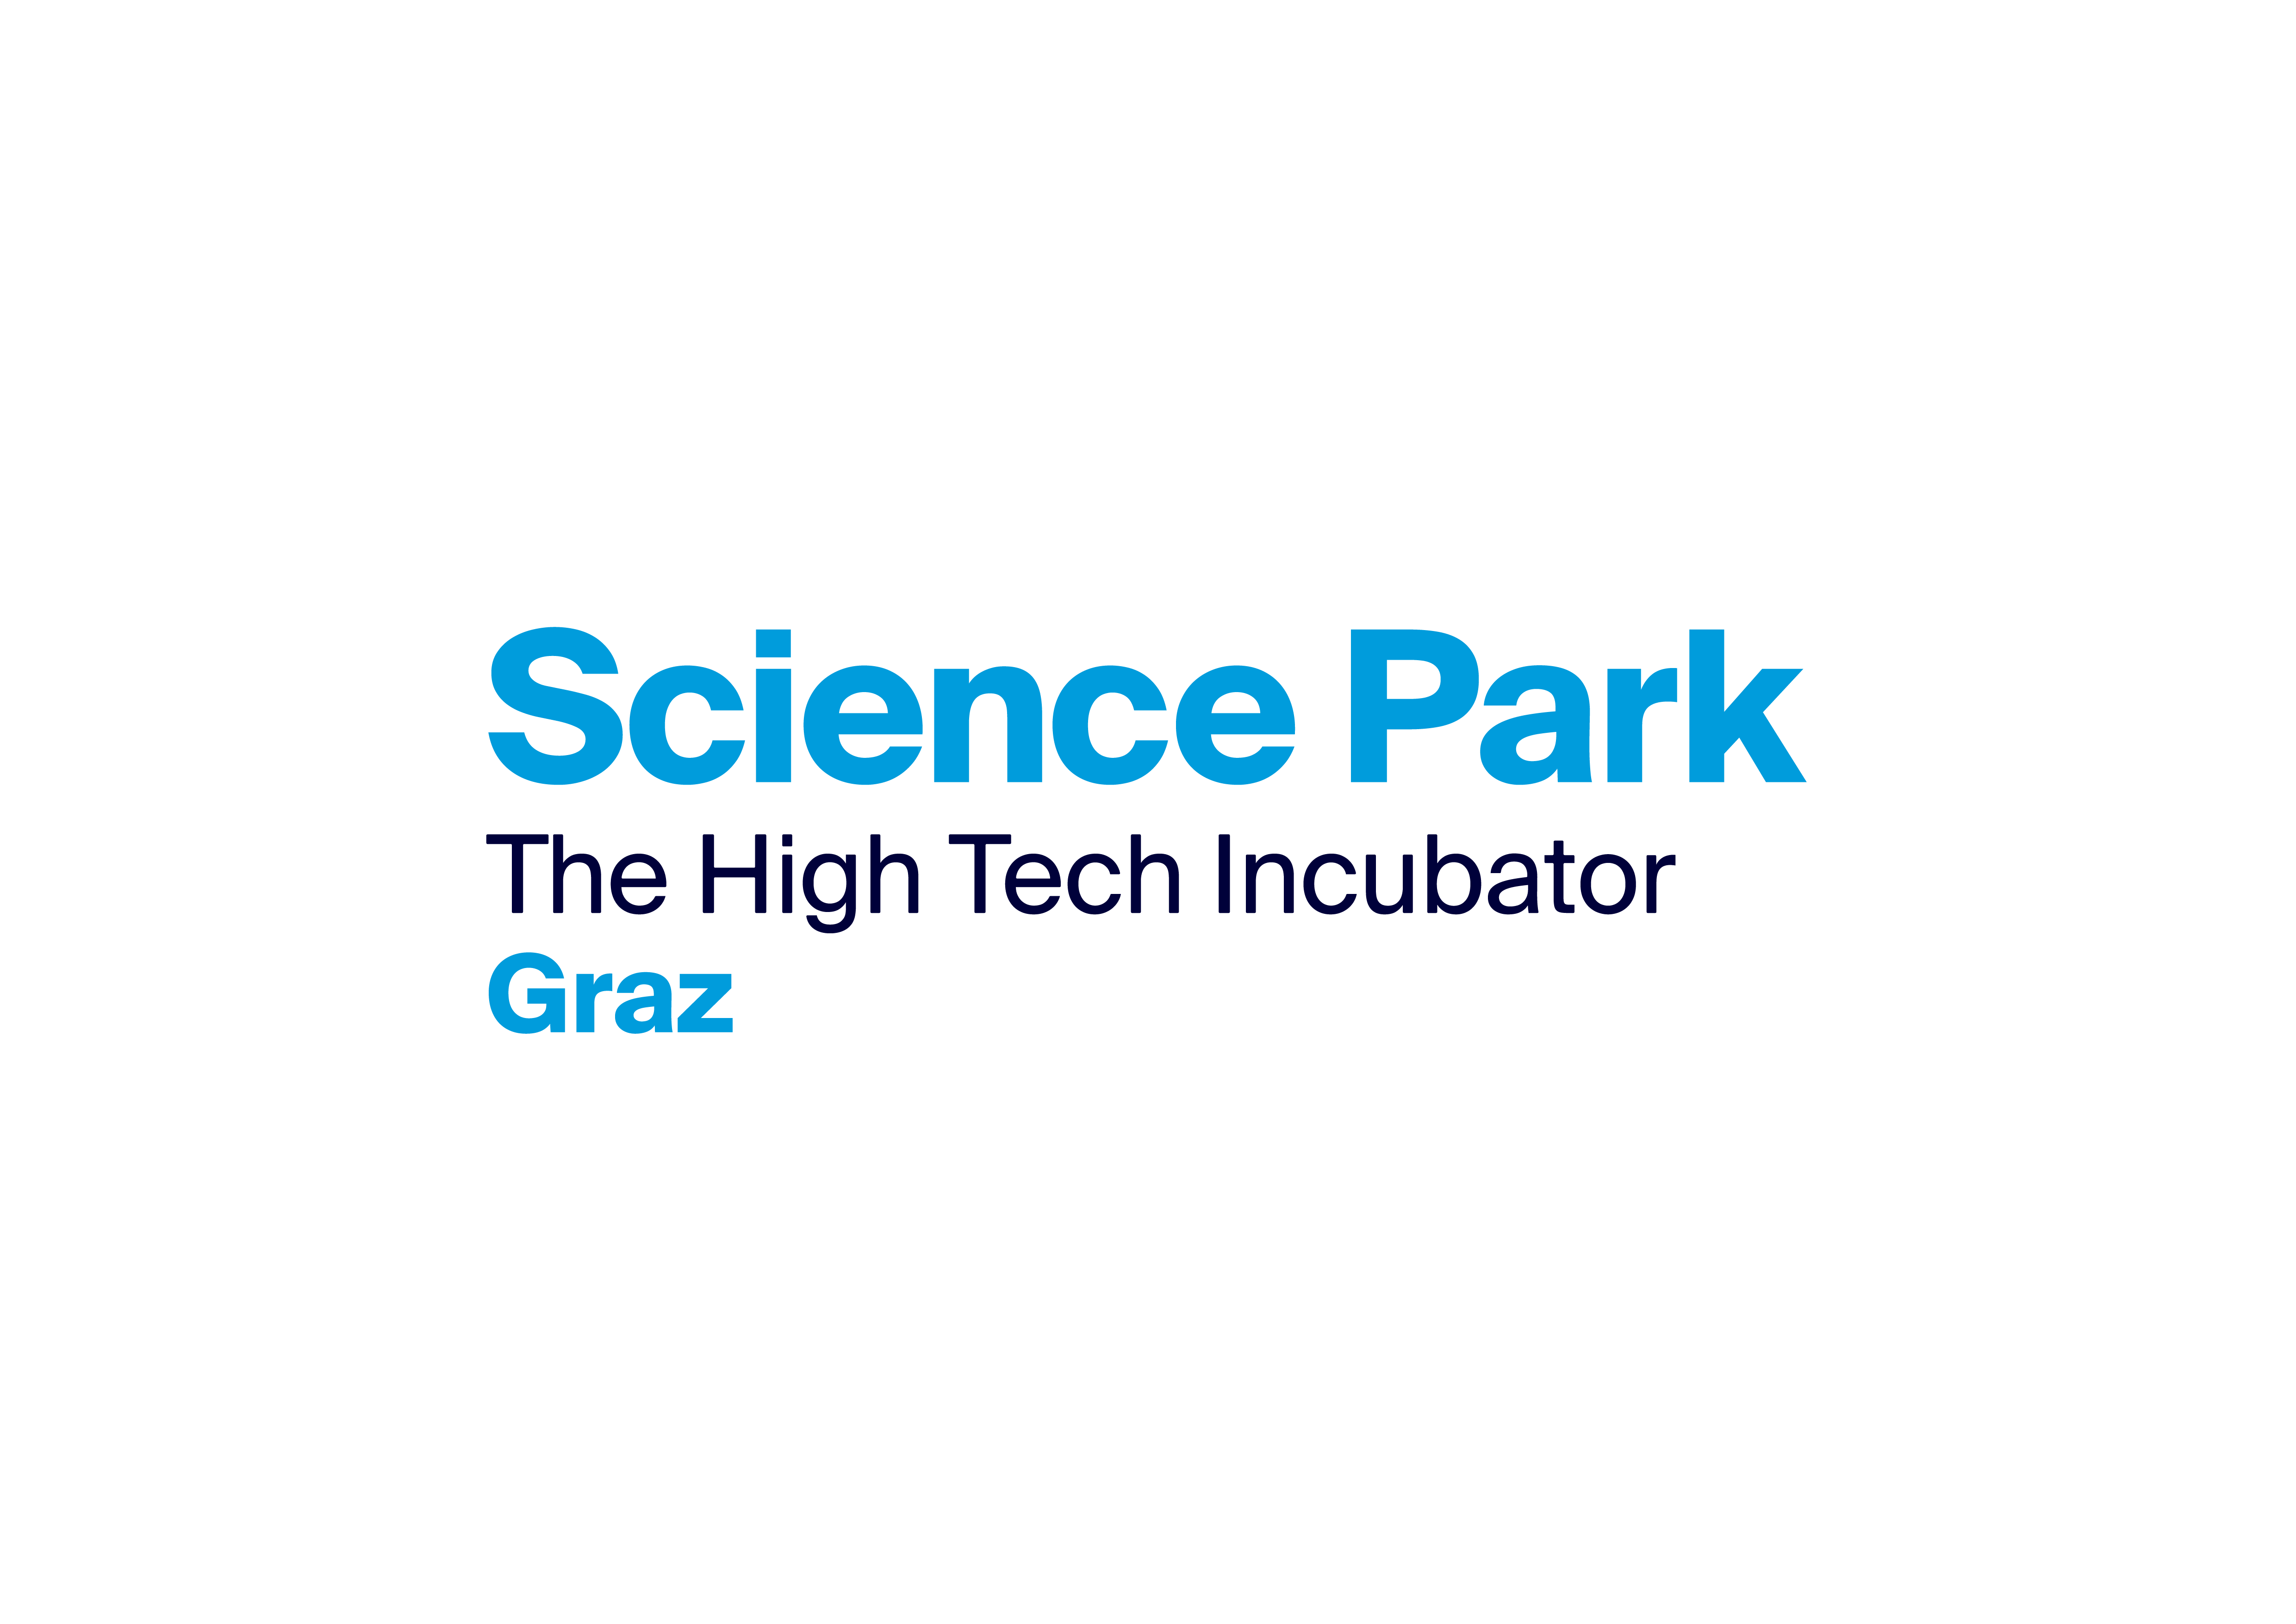 Science Park Graz - The High Tech Incubator